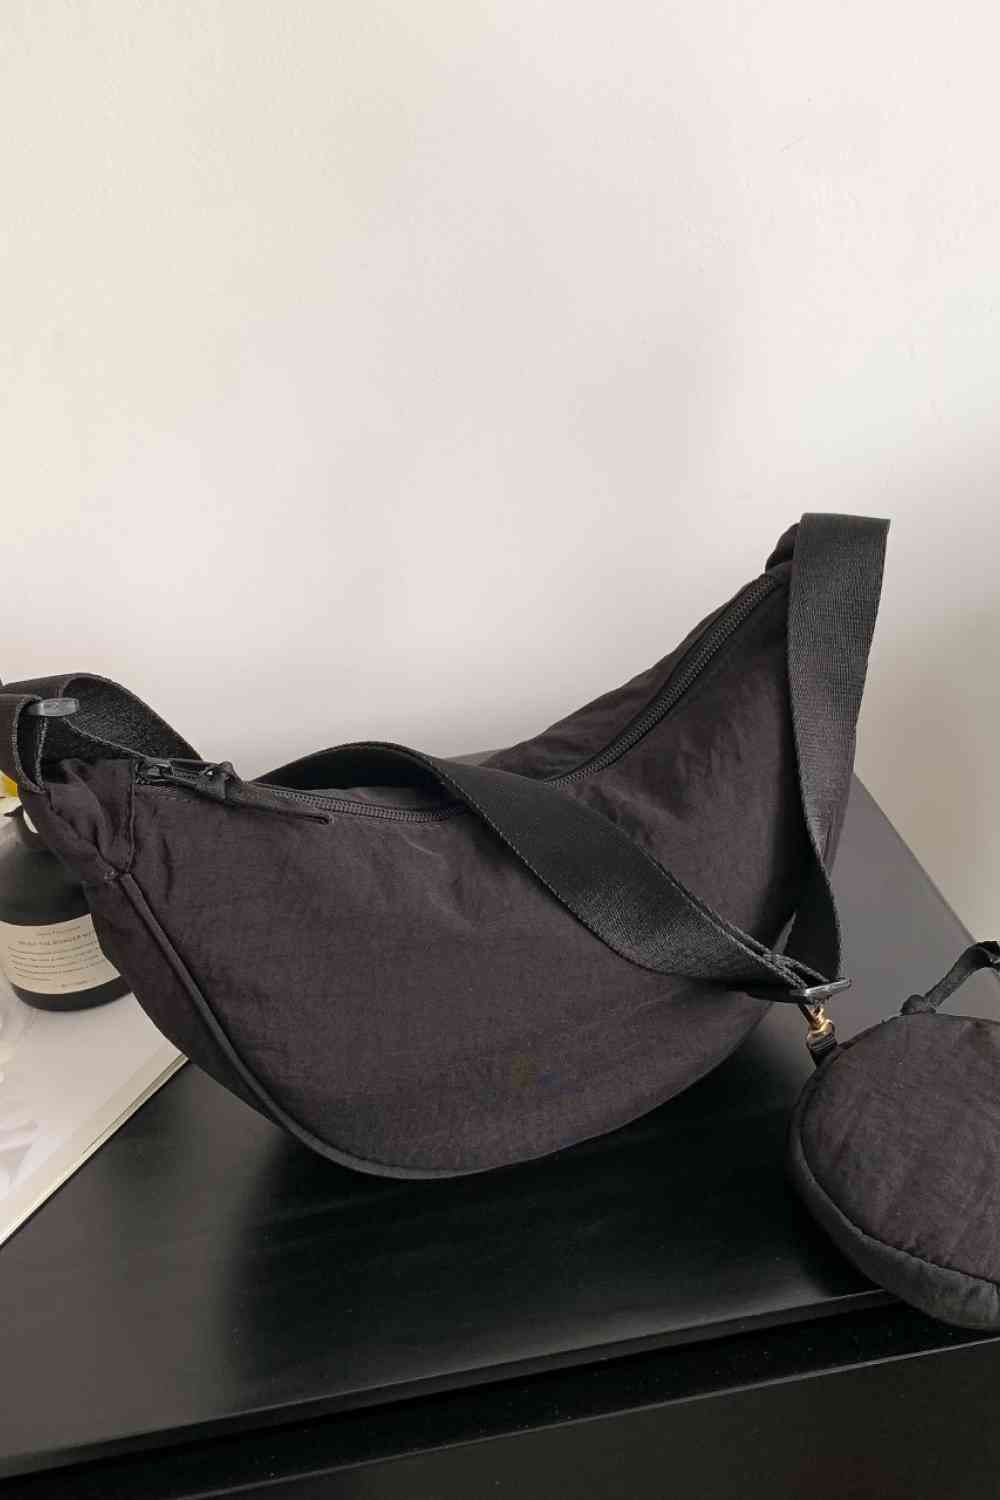 TEEK - Nylon Bag Set BAG TEEK Trend   